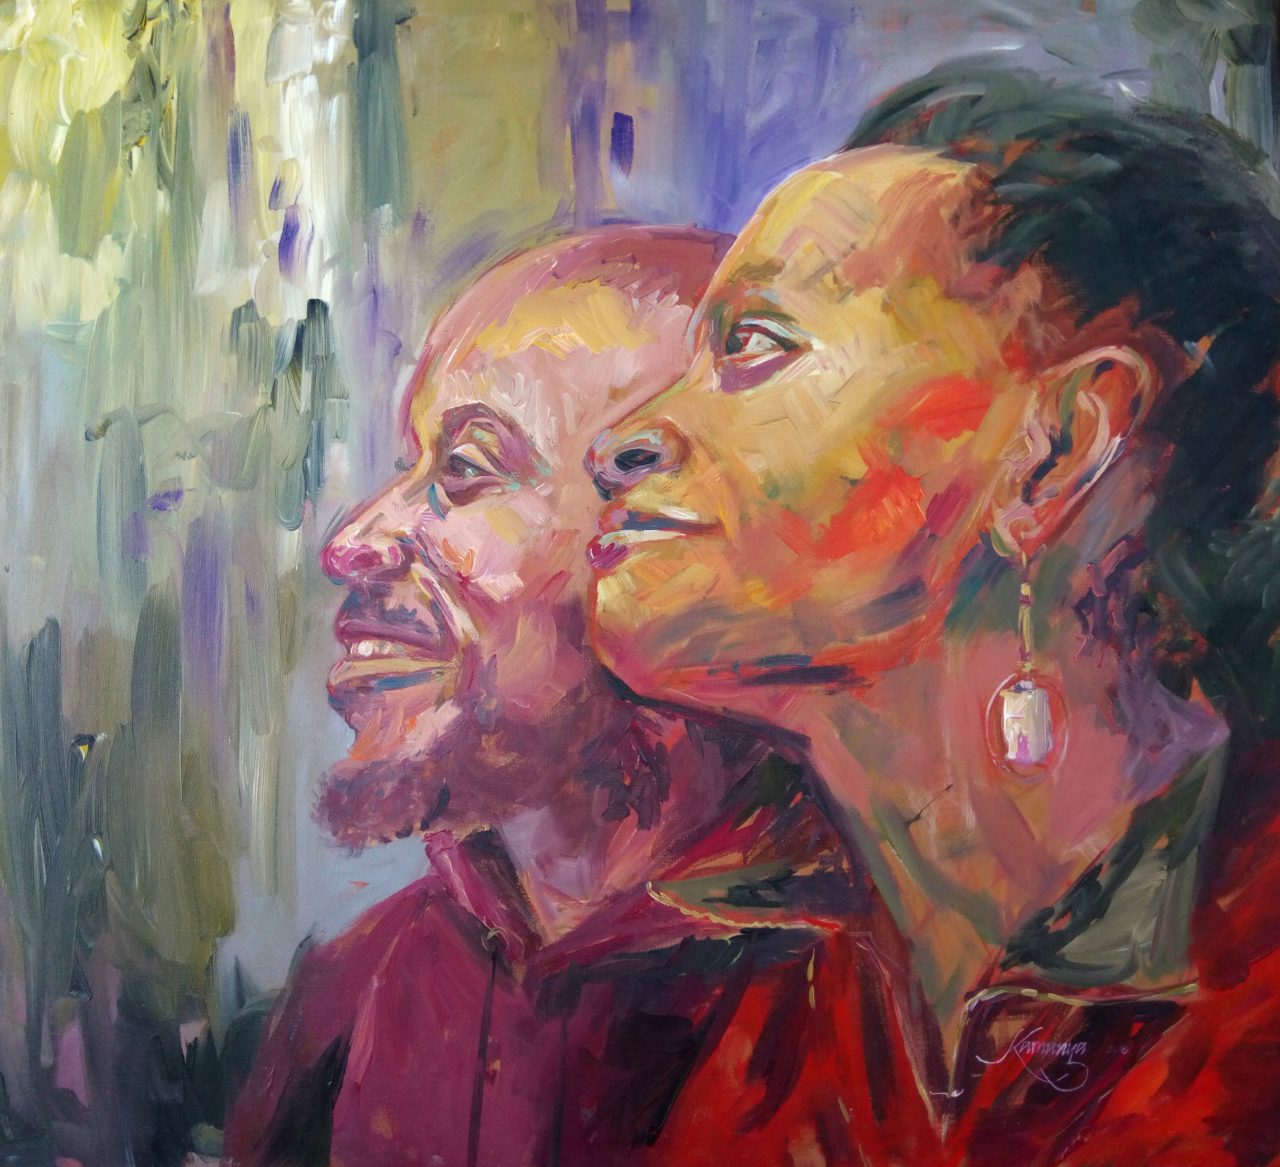 Kenya Festive Portraits Offer